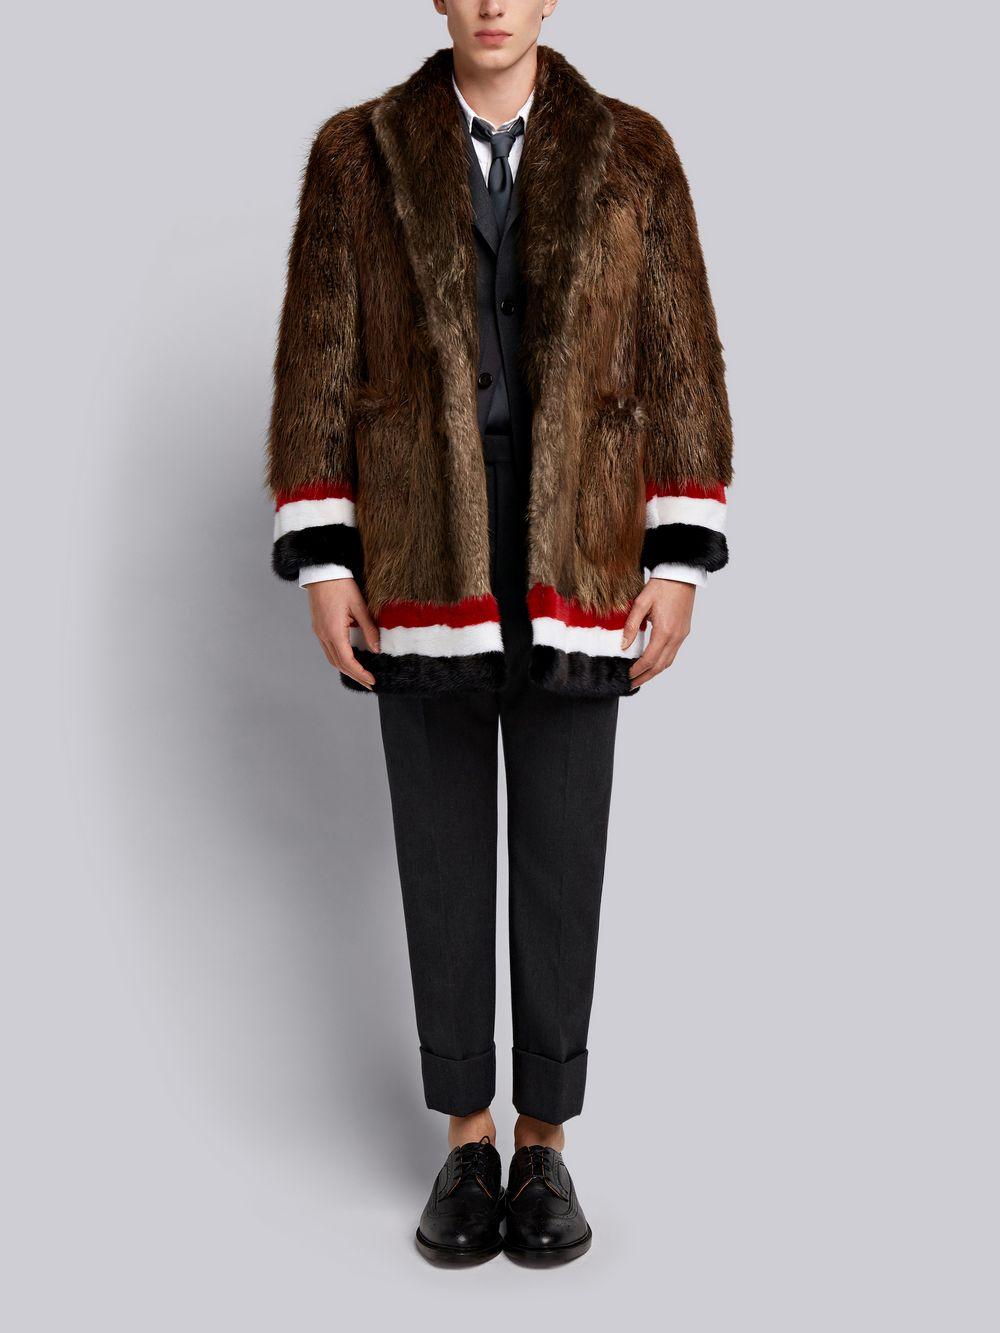 Thom Browne Painted Beaver Fur Sack Overcoat in Brown for Men - Lyst